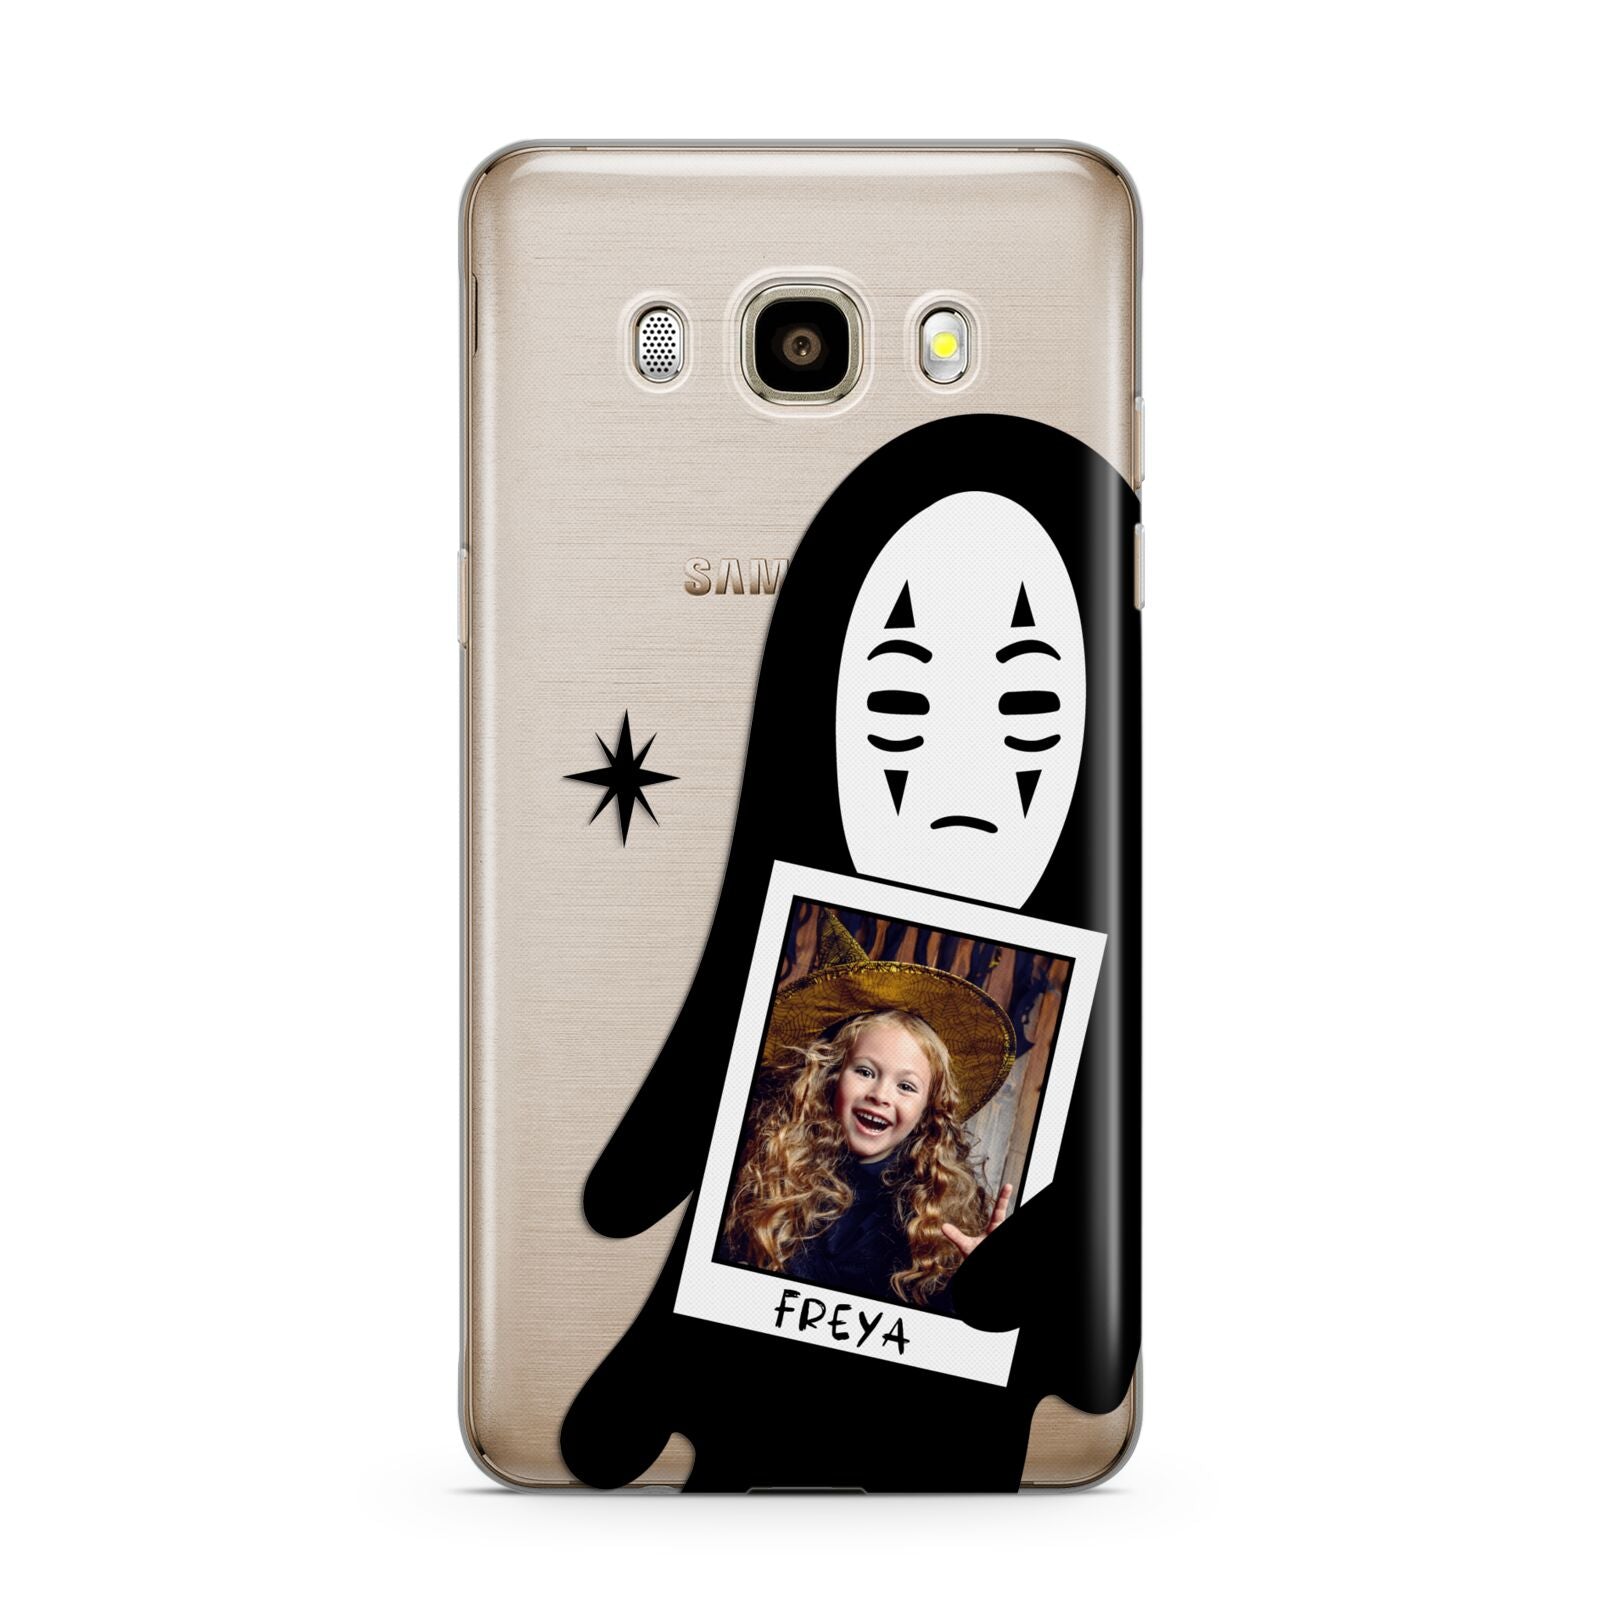 Ghostly Halloween Photo Samsung Galaxy J7 2016 Case on gold phone